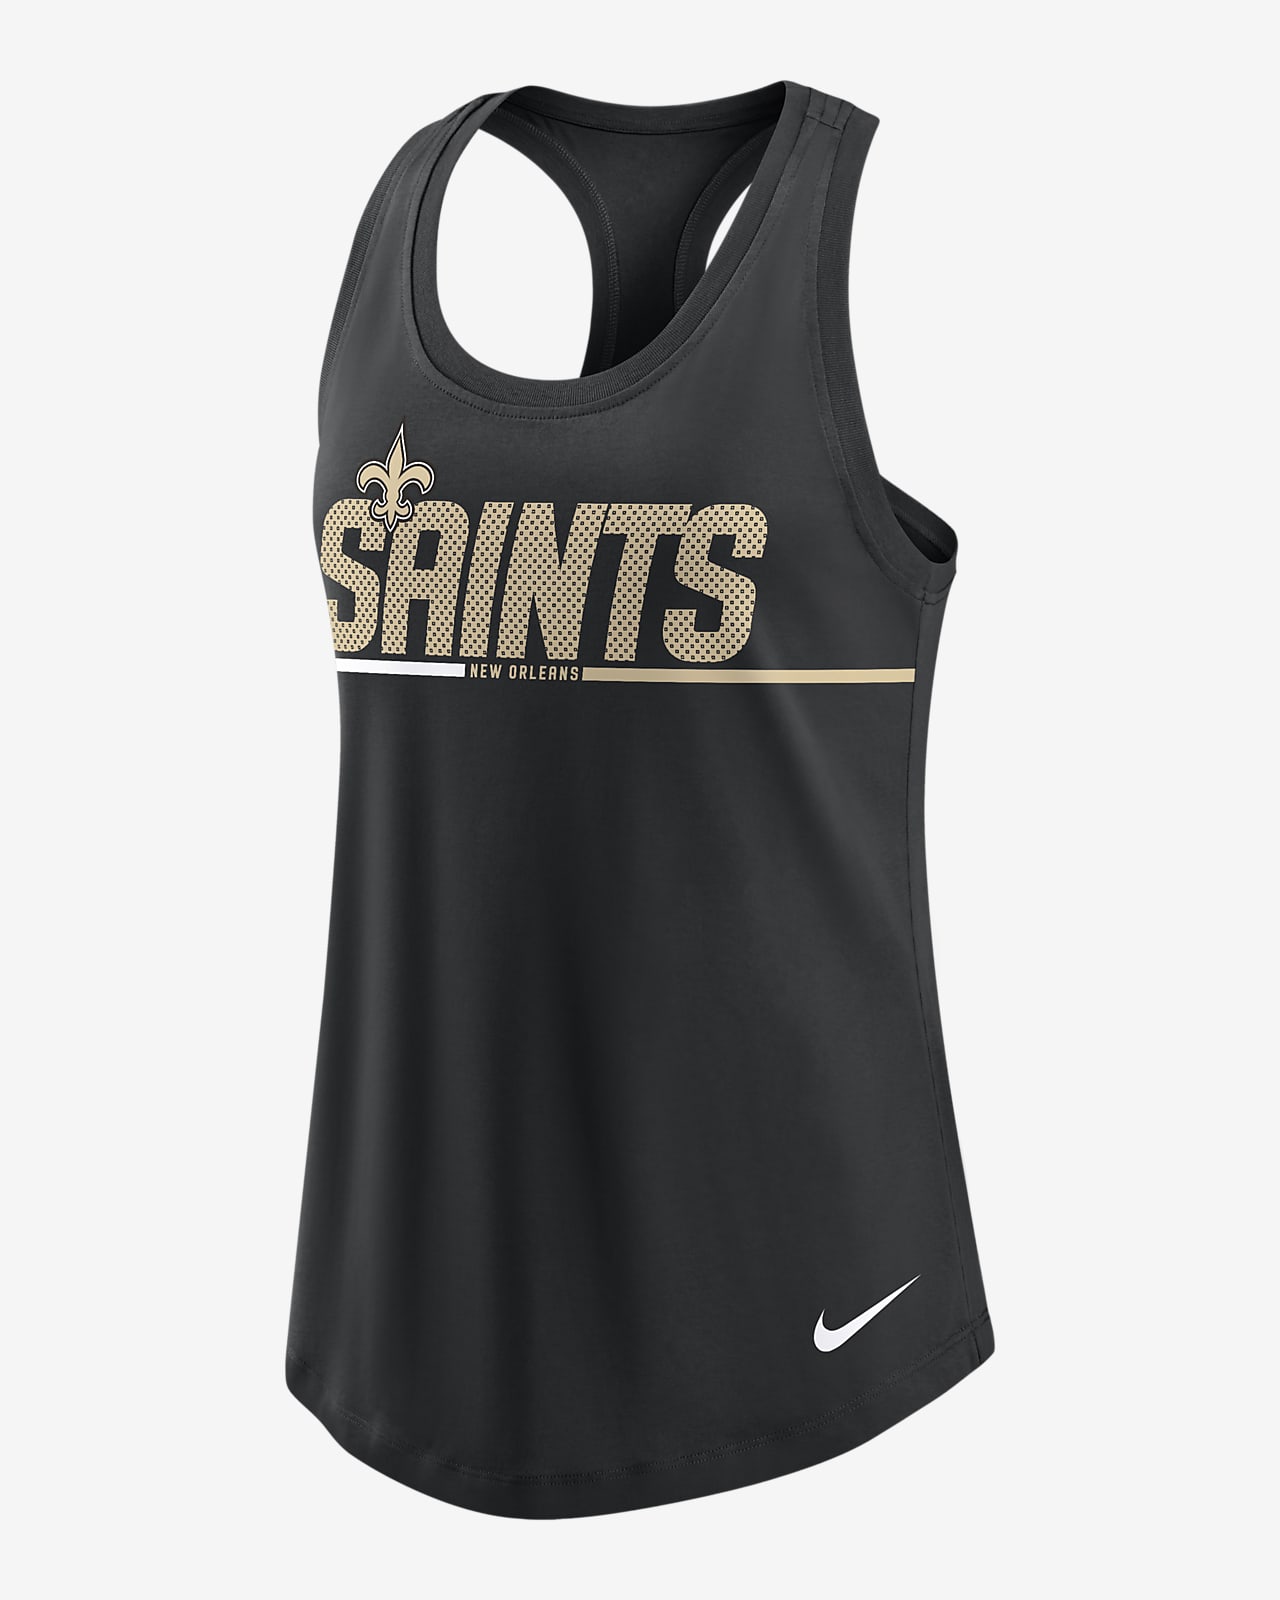 Nike City (NFL New Orleans Saints) Women's Racerback Tank Top